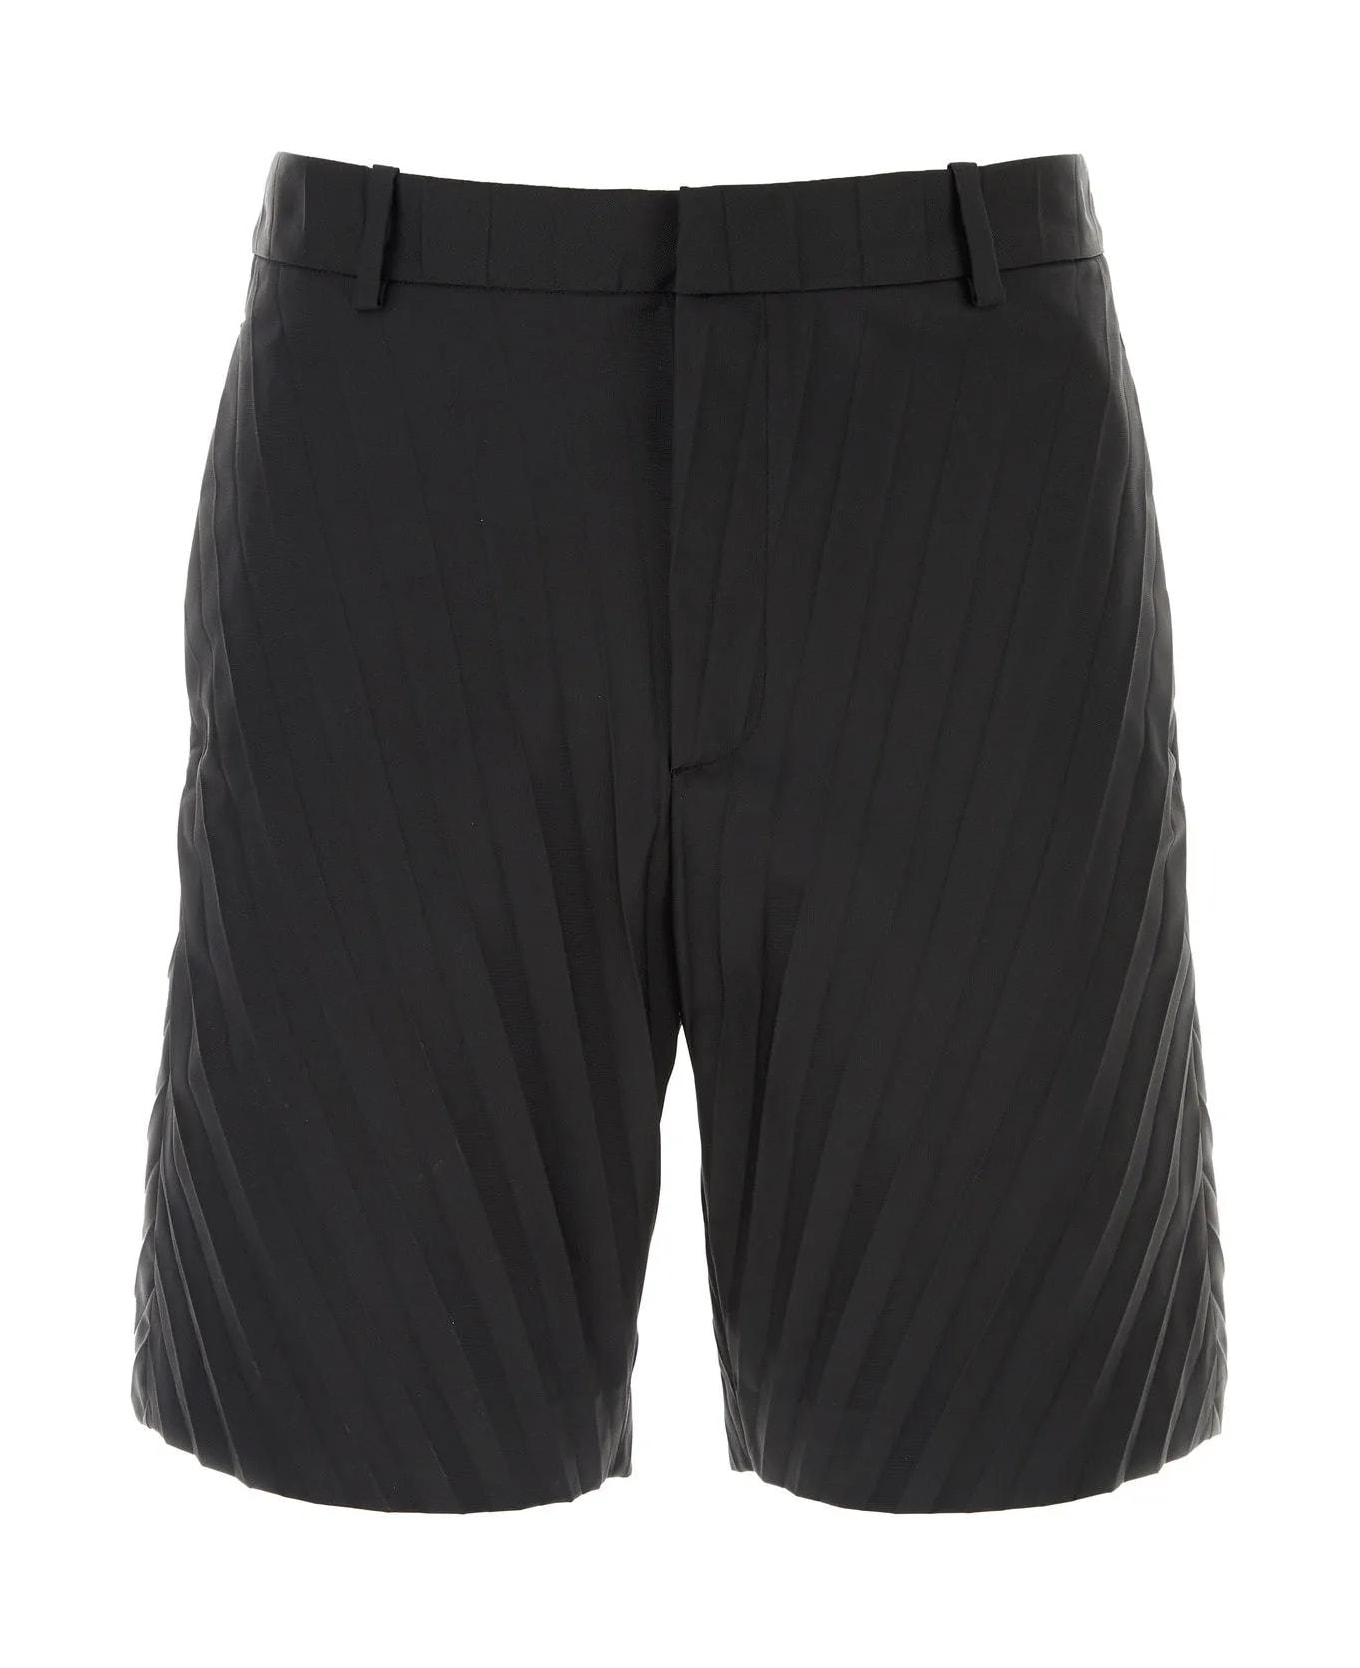 Valentino Garavani Black Nylon Bermuda Shorts